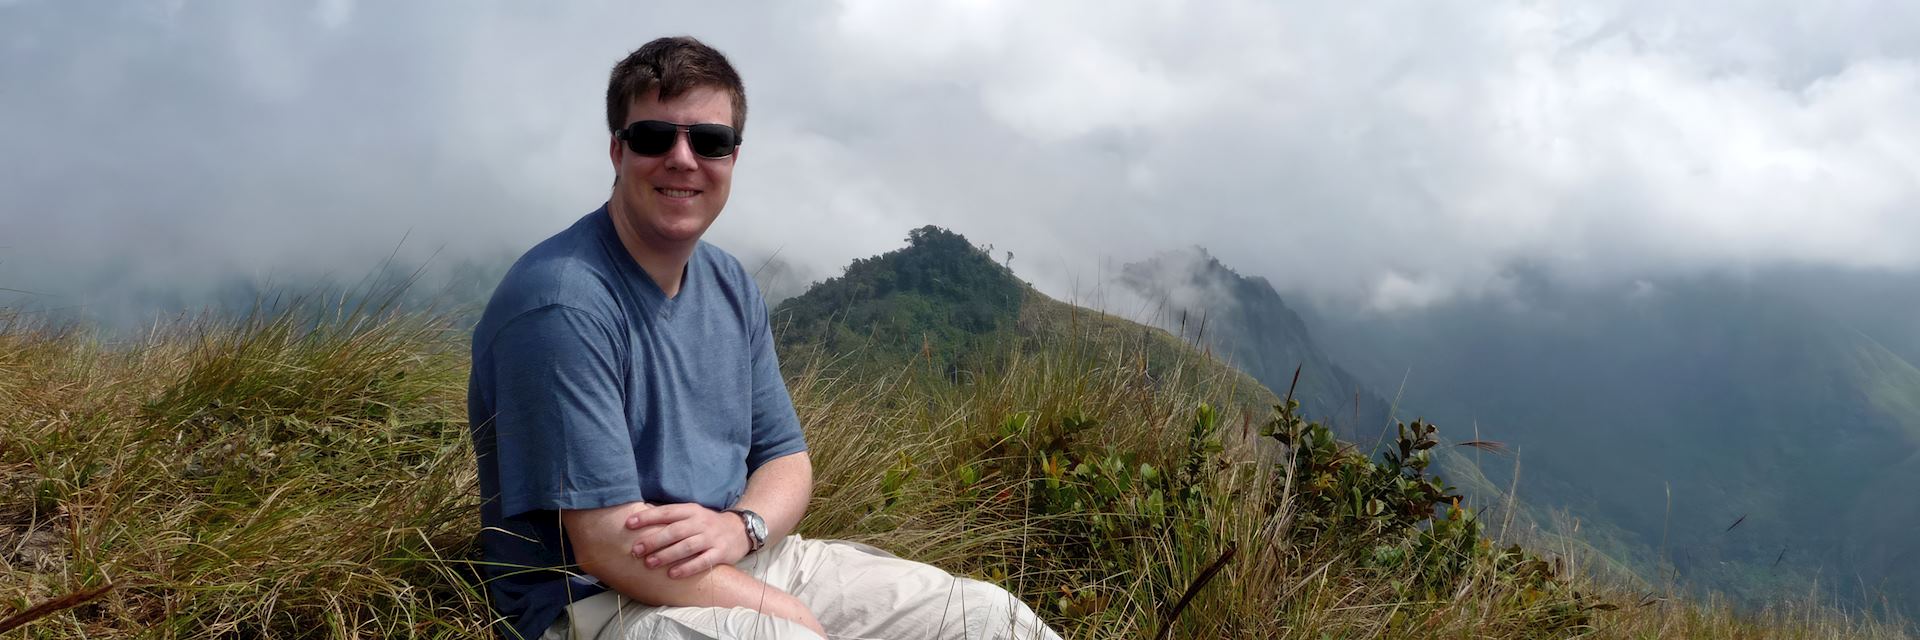 James enjoying the view in Munnar, India